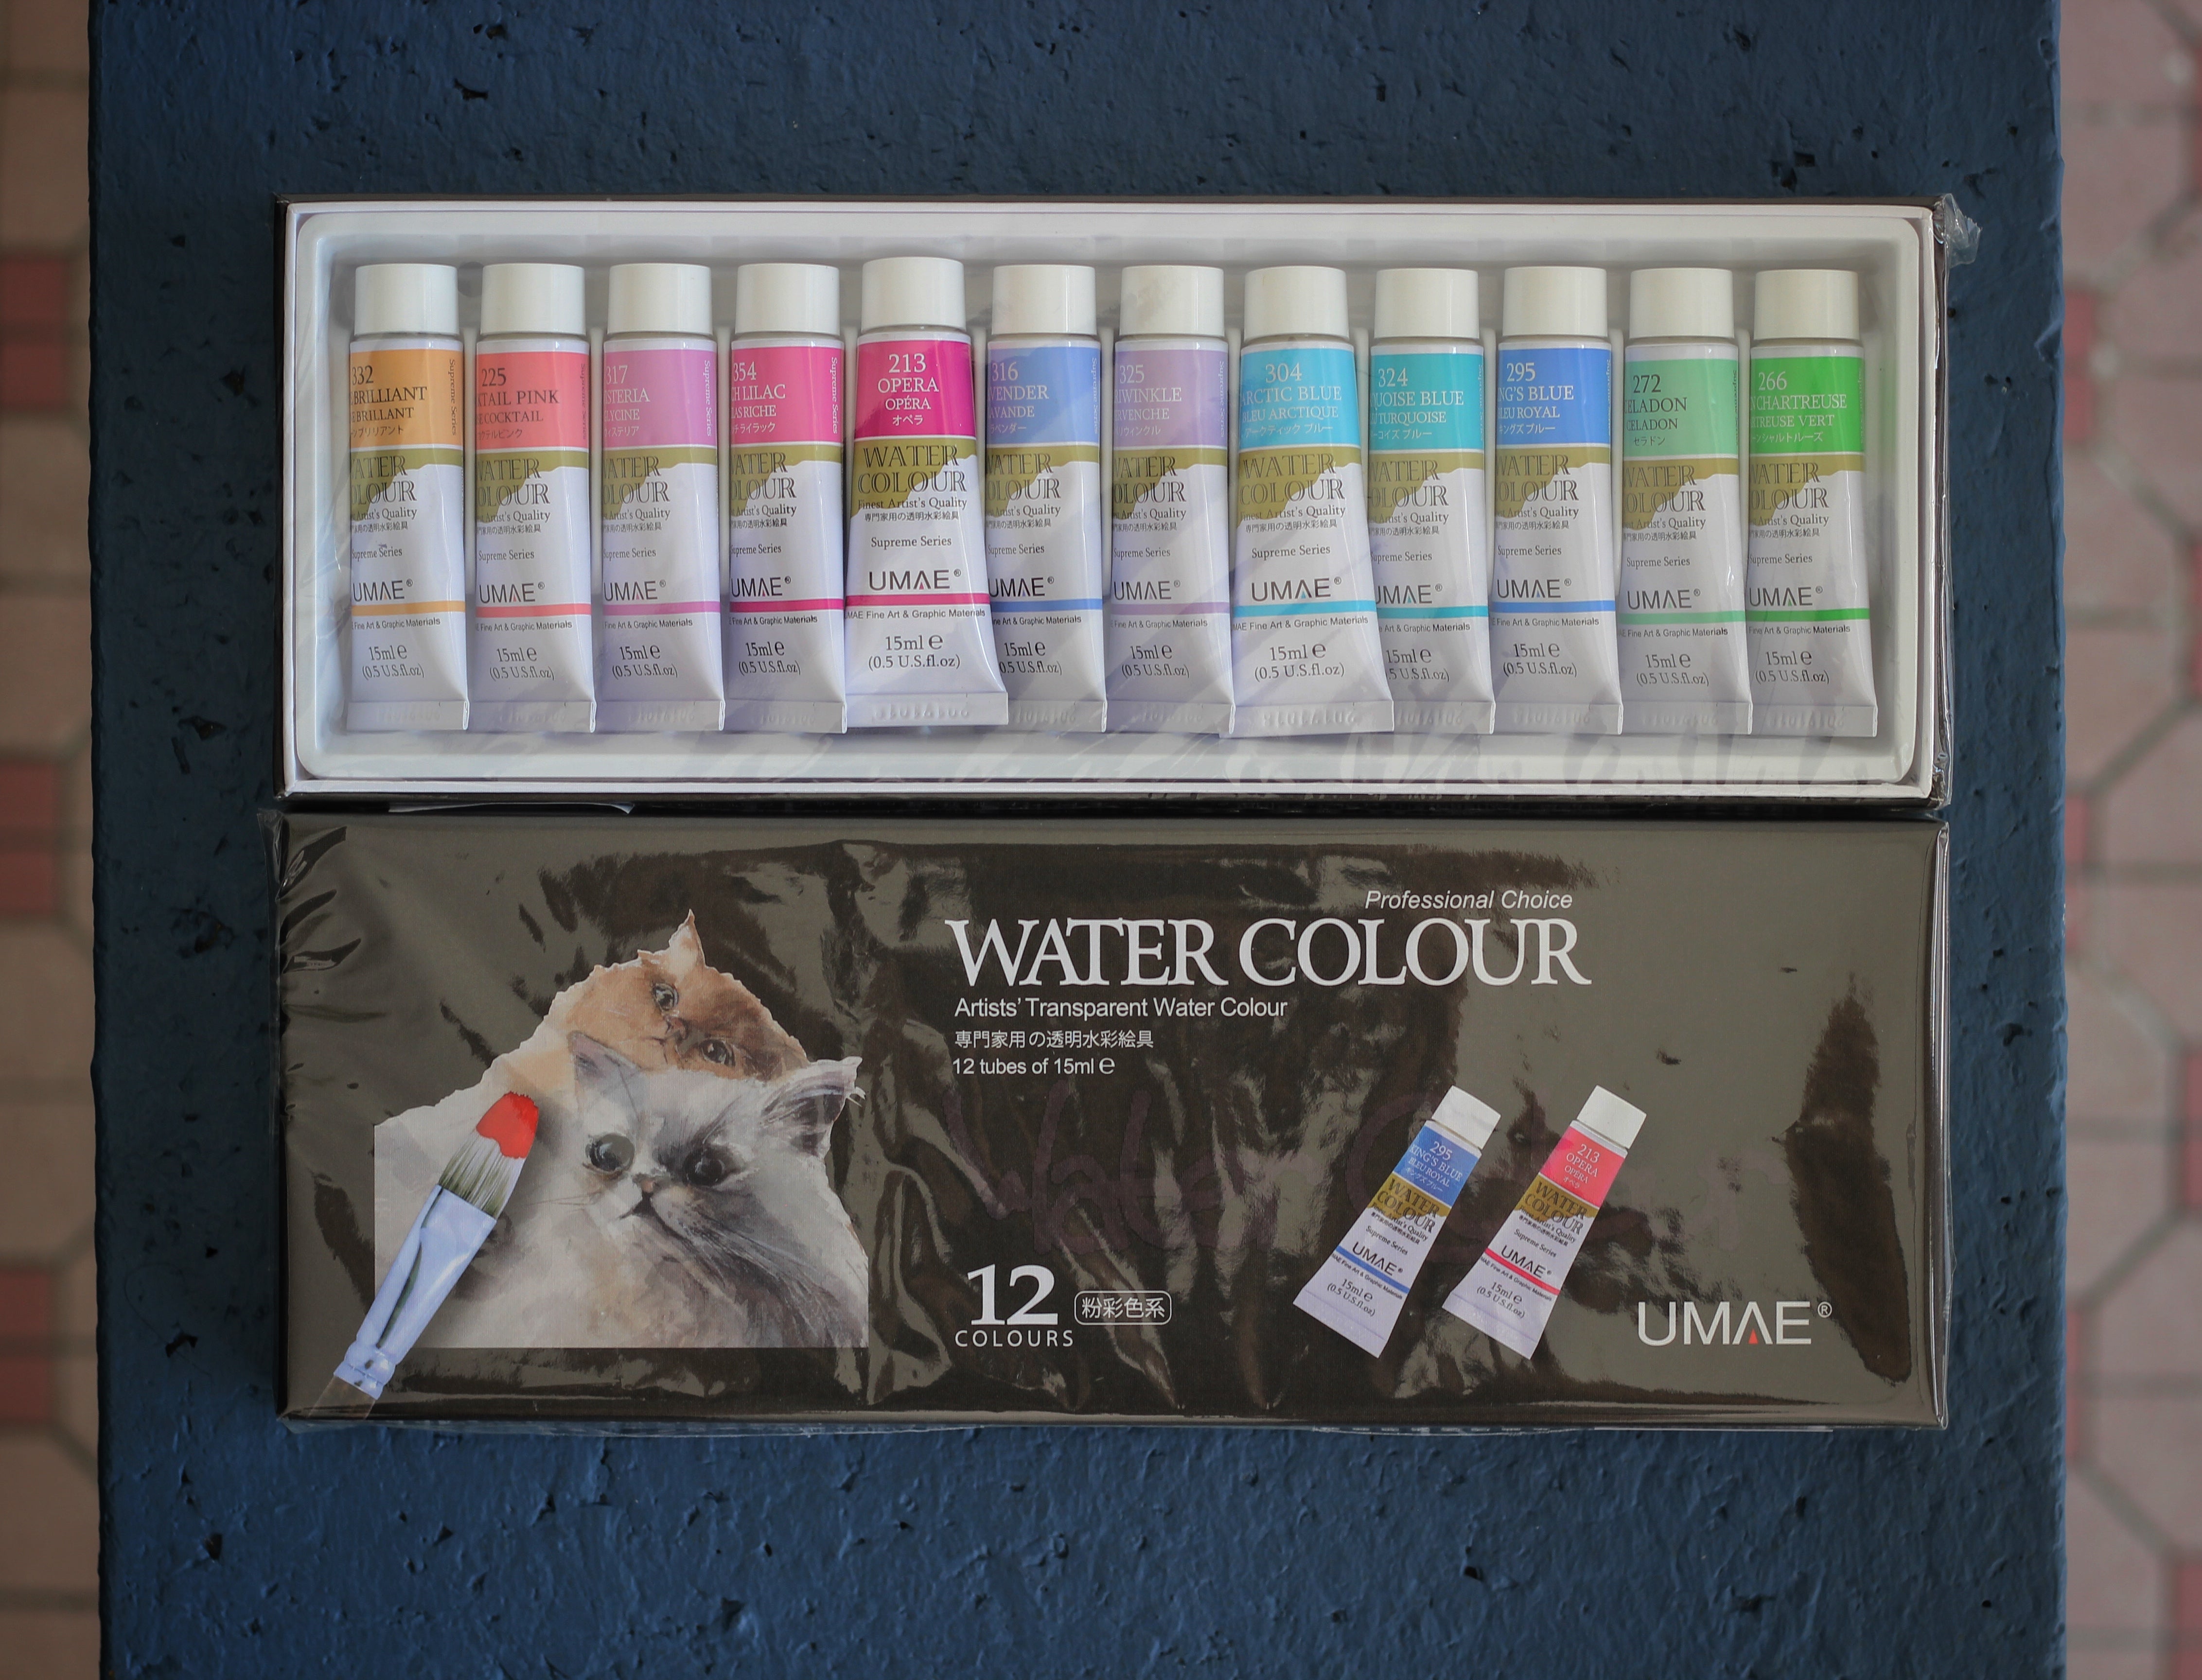 UMAE Professional Choice Watercolor 12 Colors Set